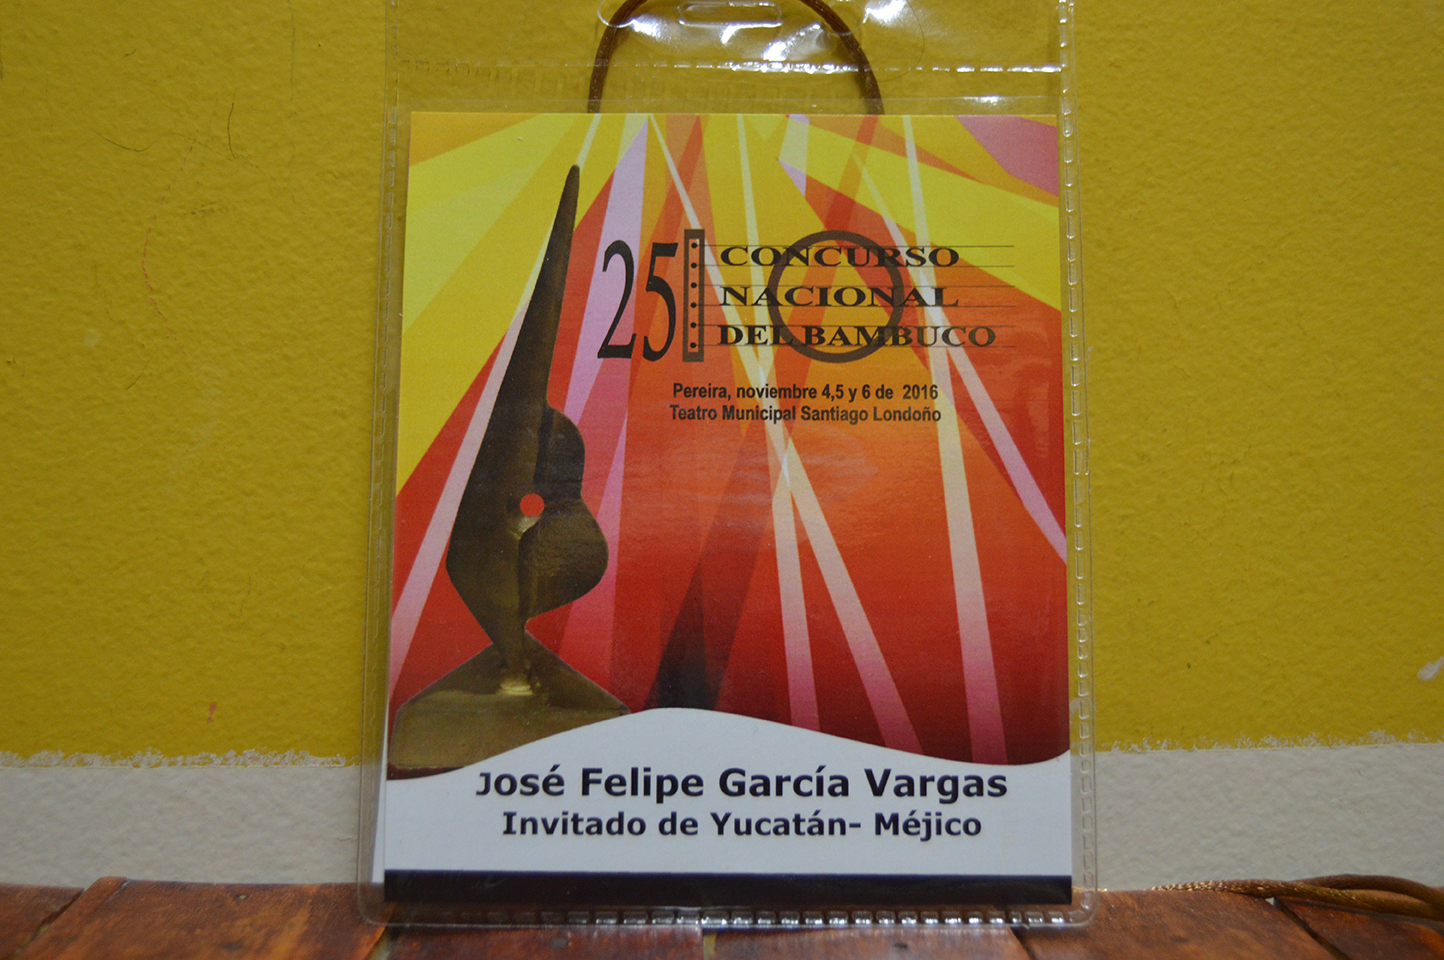 El gaffette que el comité organizador del Concurso Nacional del bambuco me asignó: Felipe García